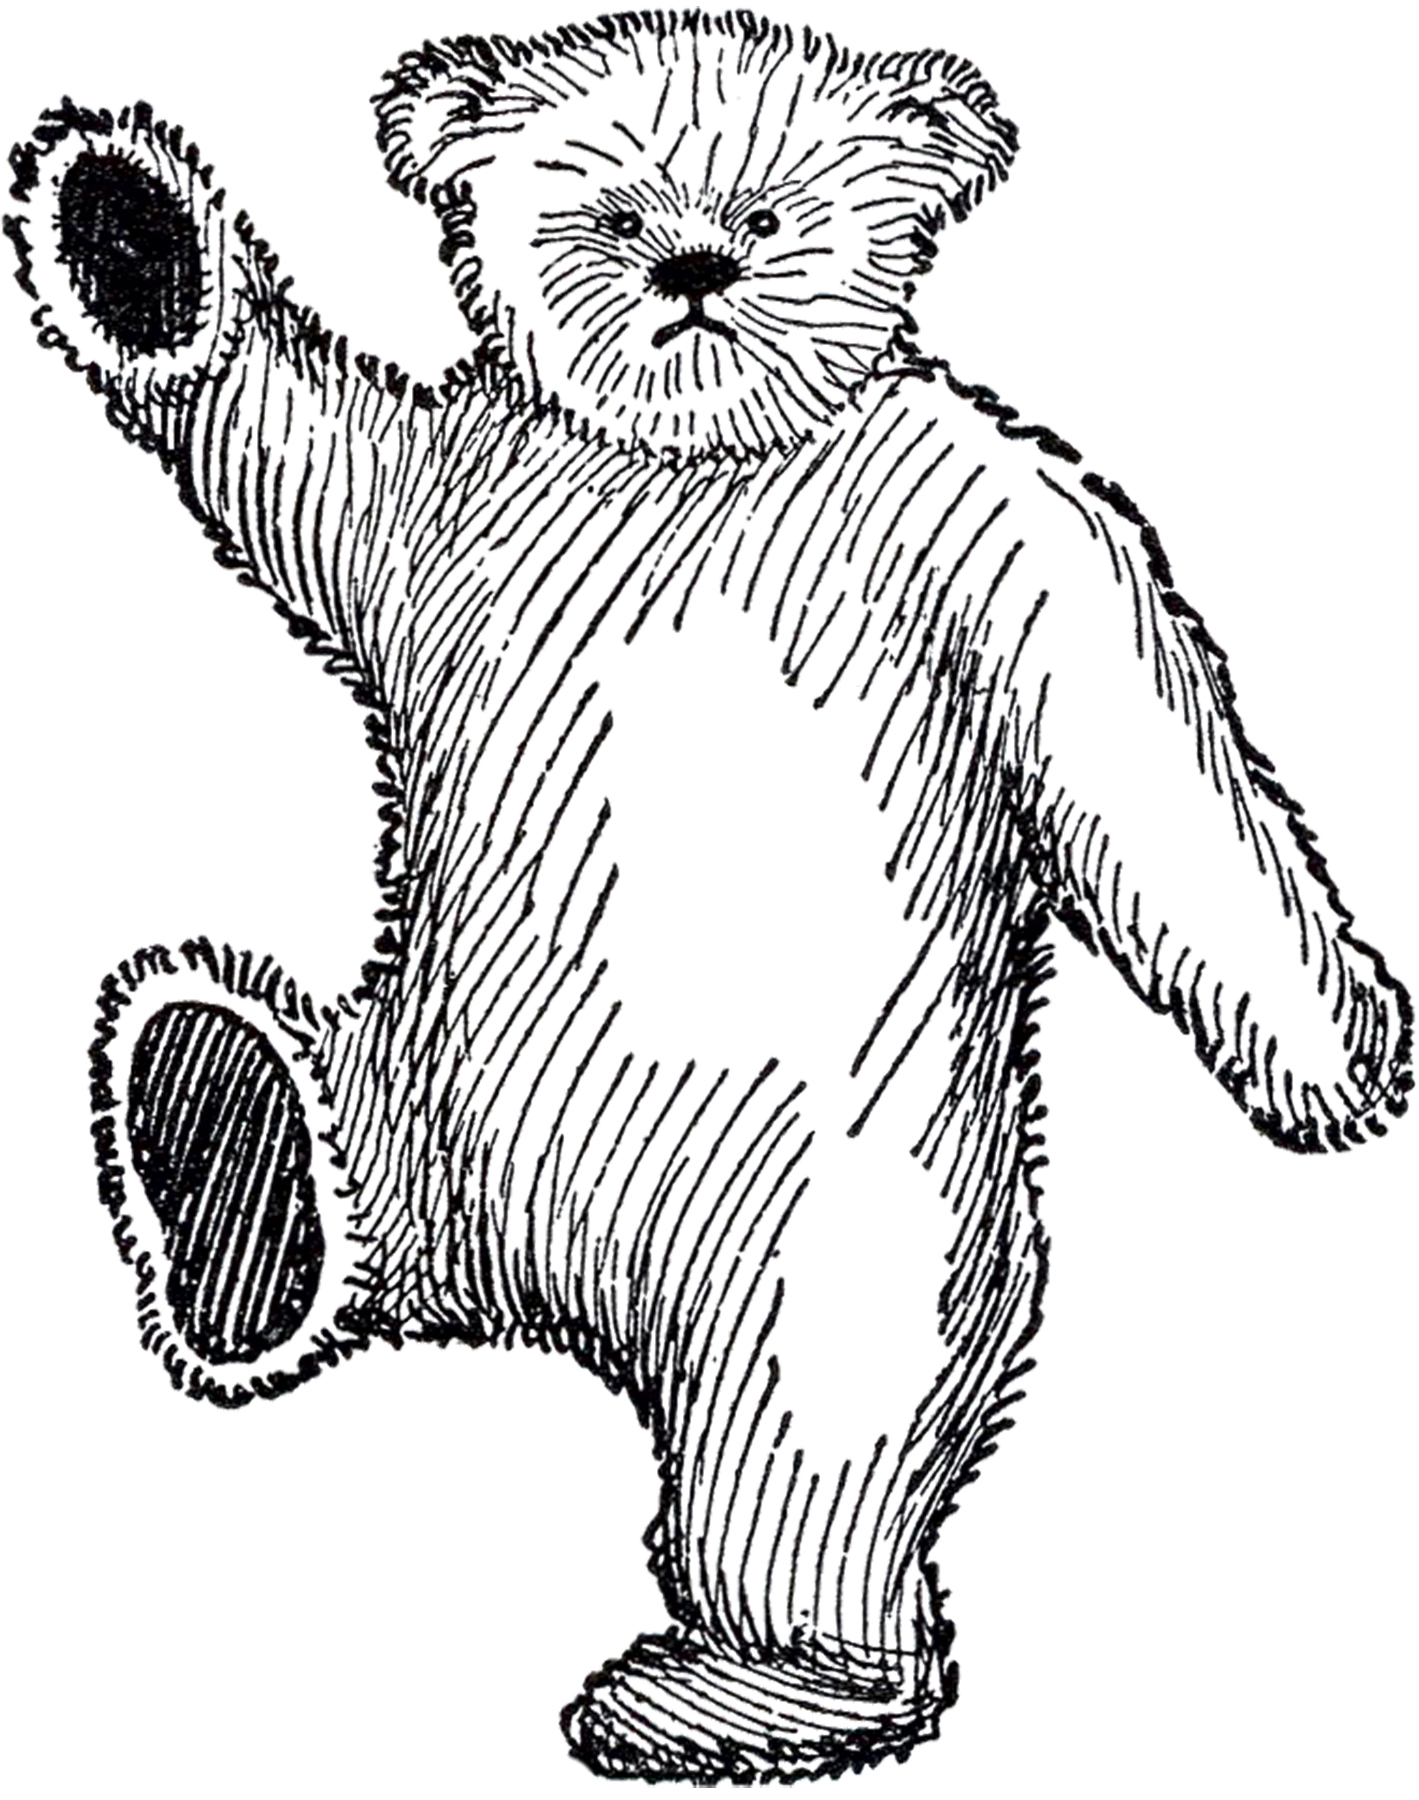 vintage teddy bear illustration